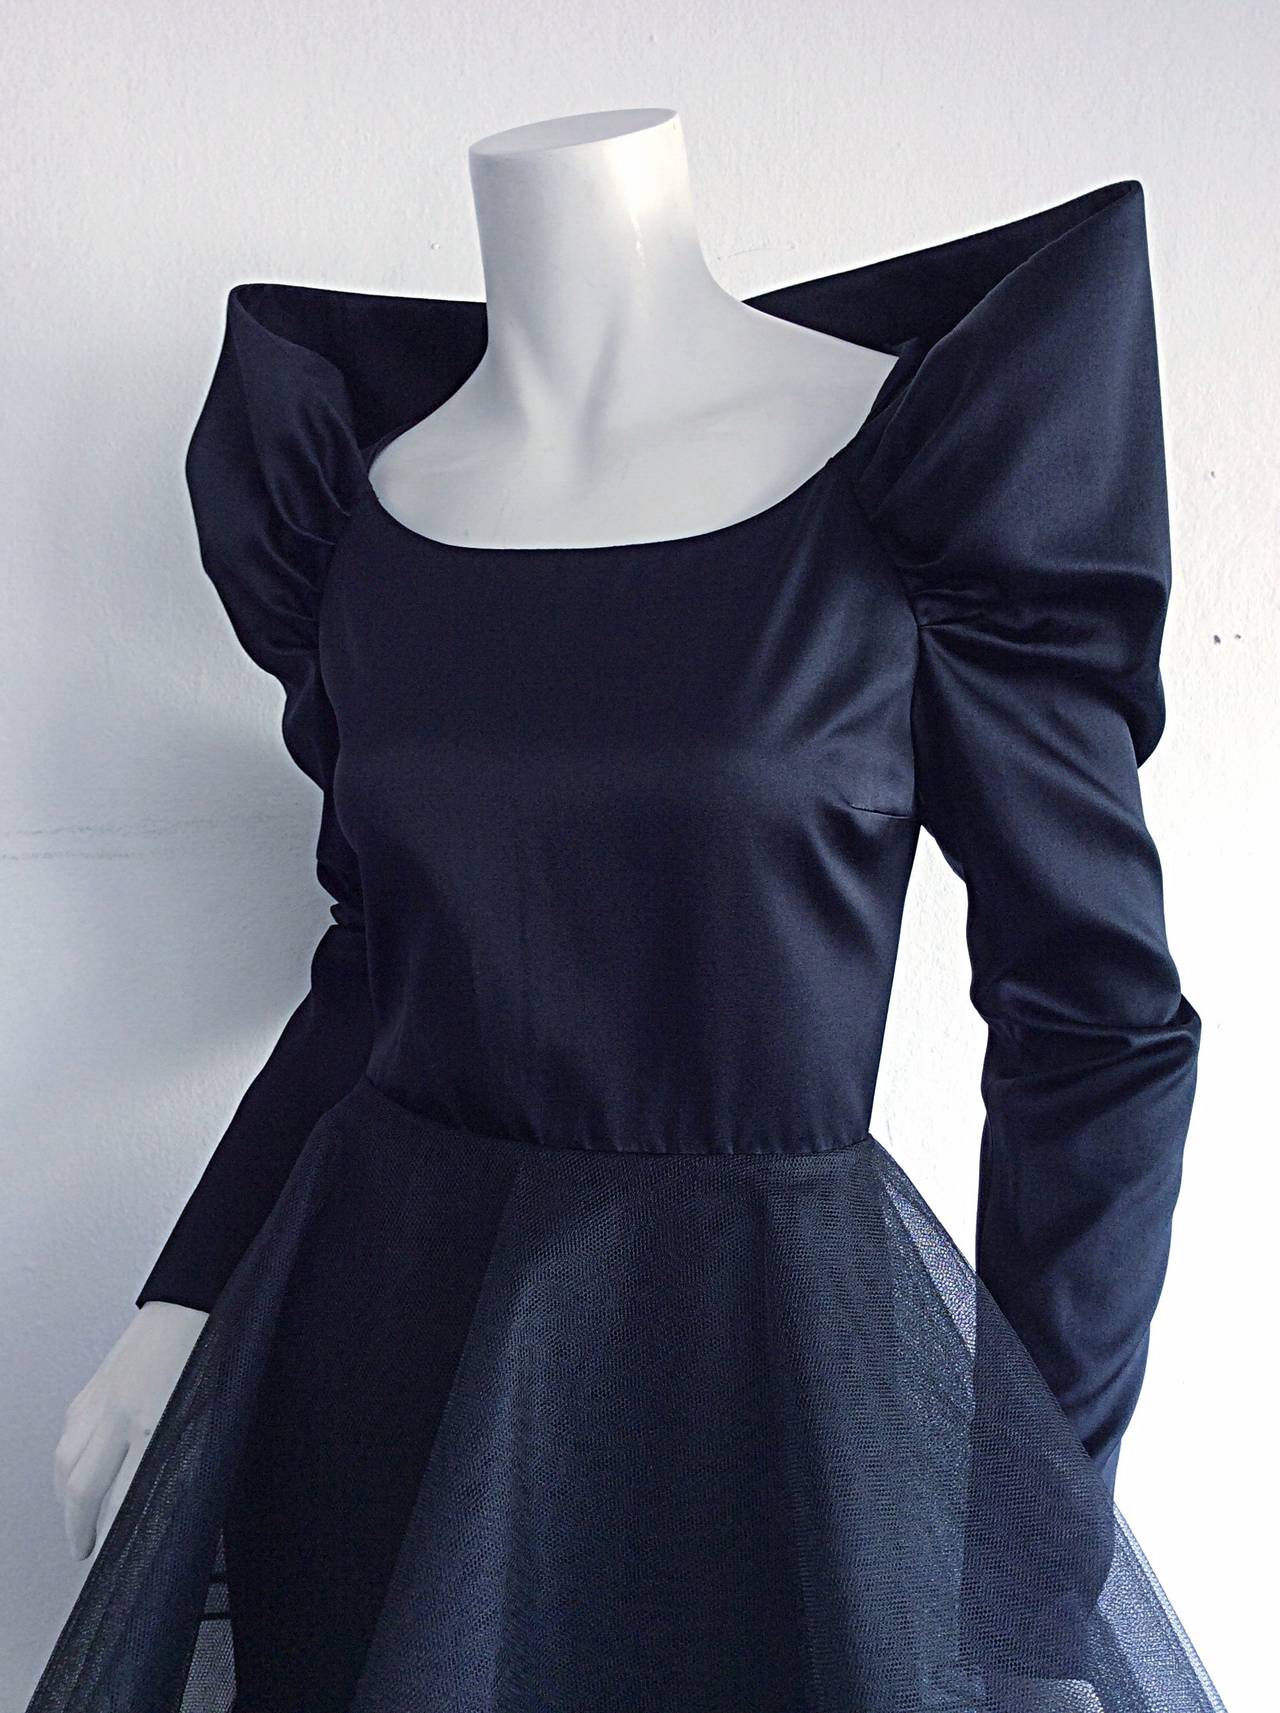 Women's Incredible Vintage Nina Ricci Couture Edwardian Styled Black Crinoline Dress